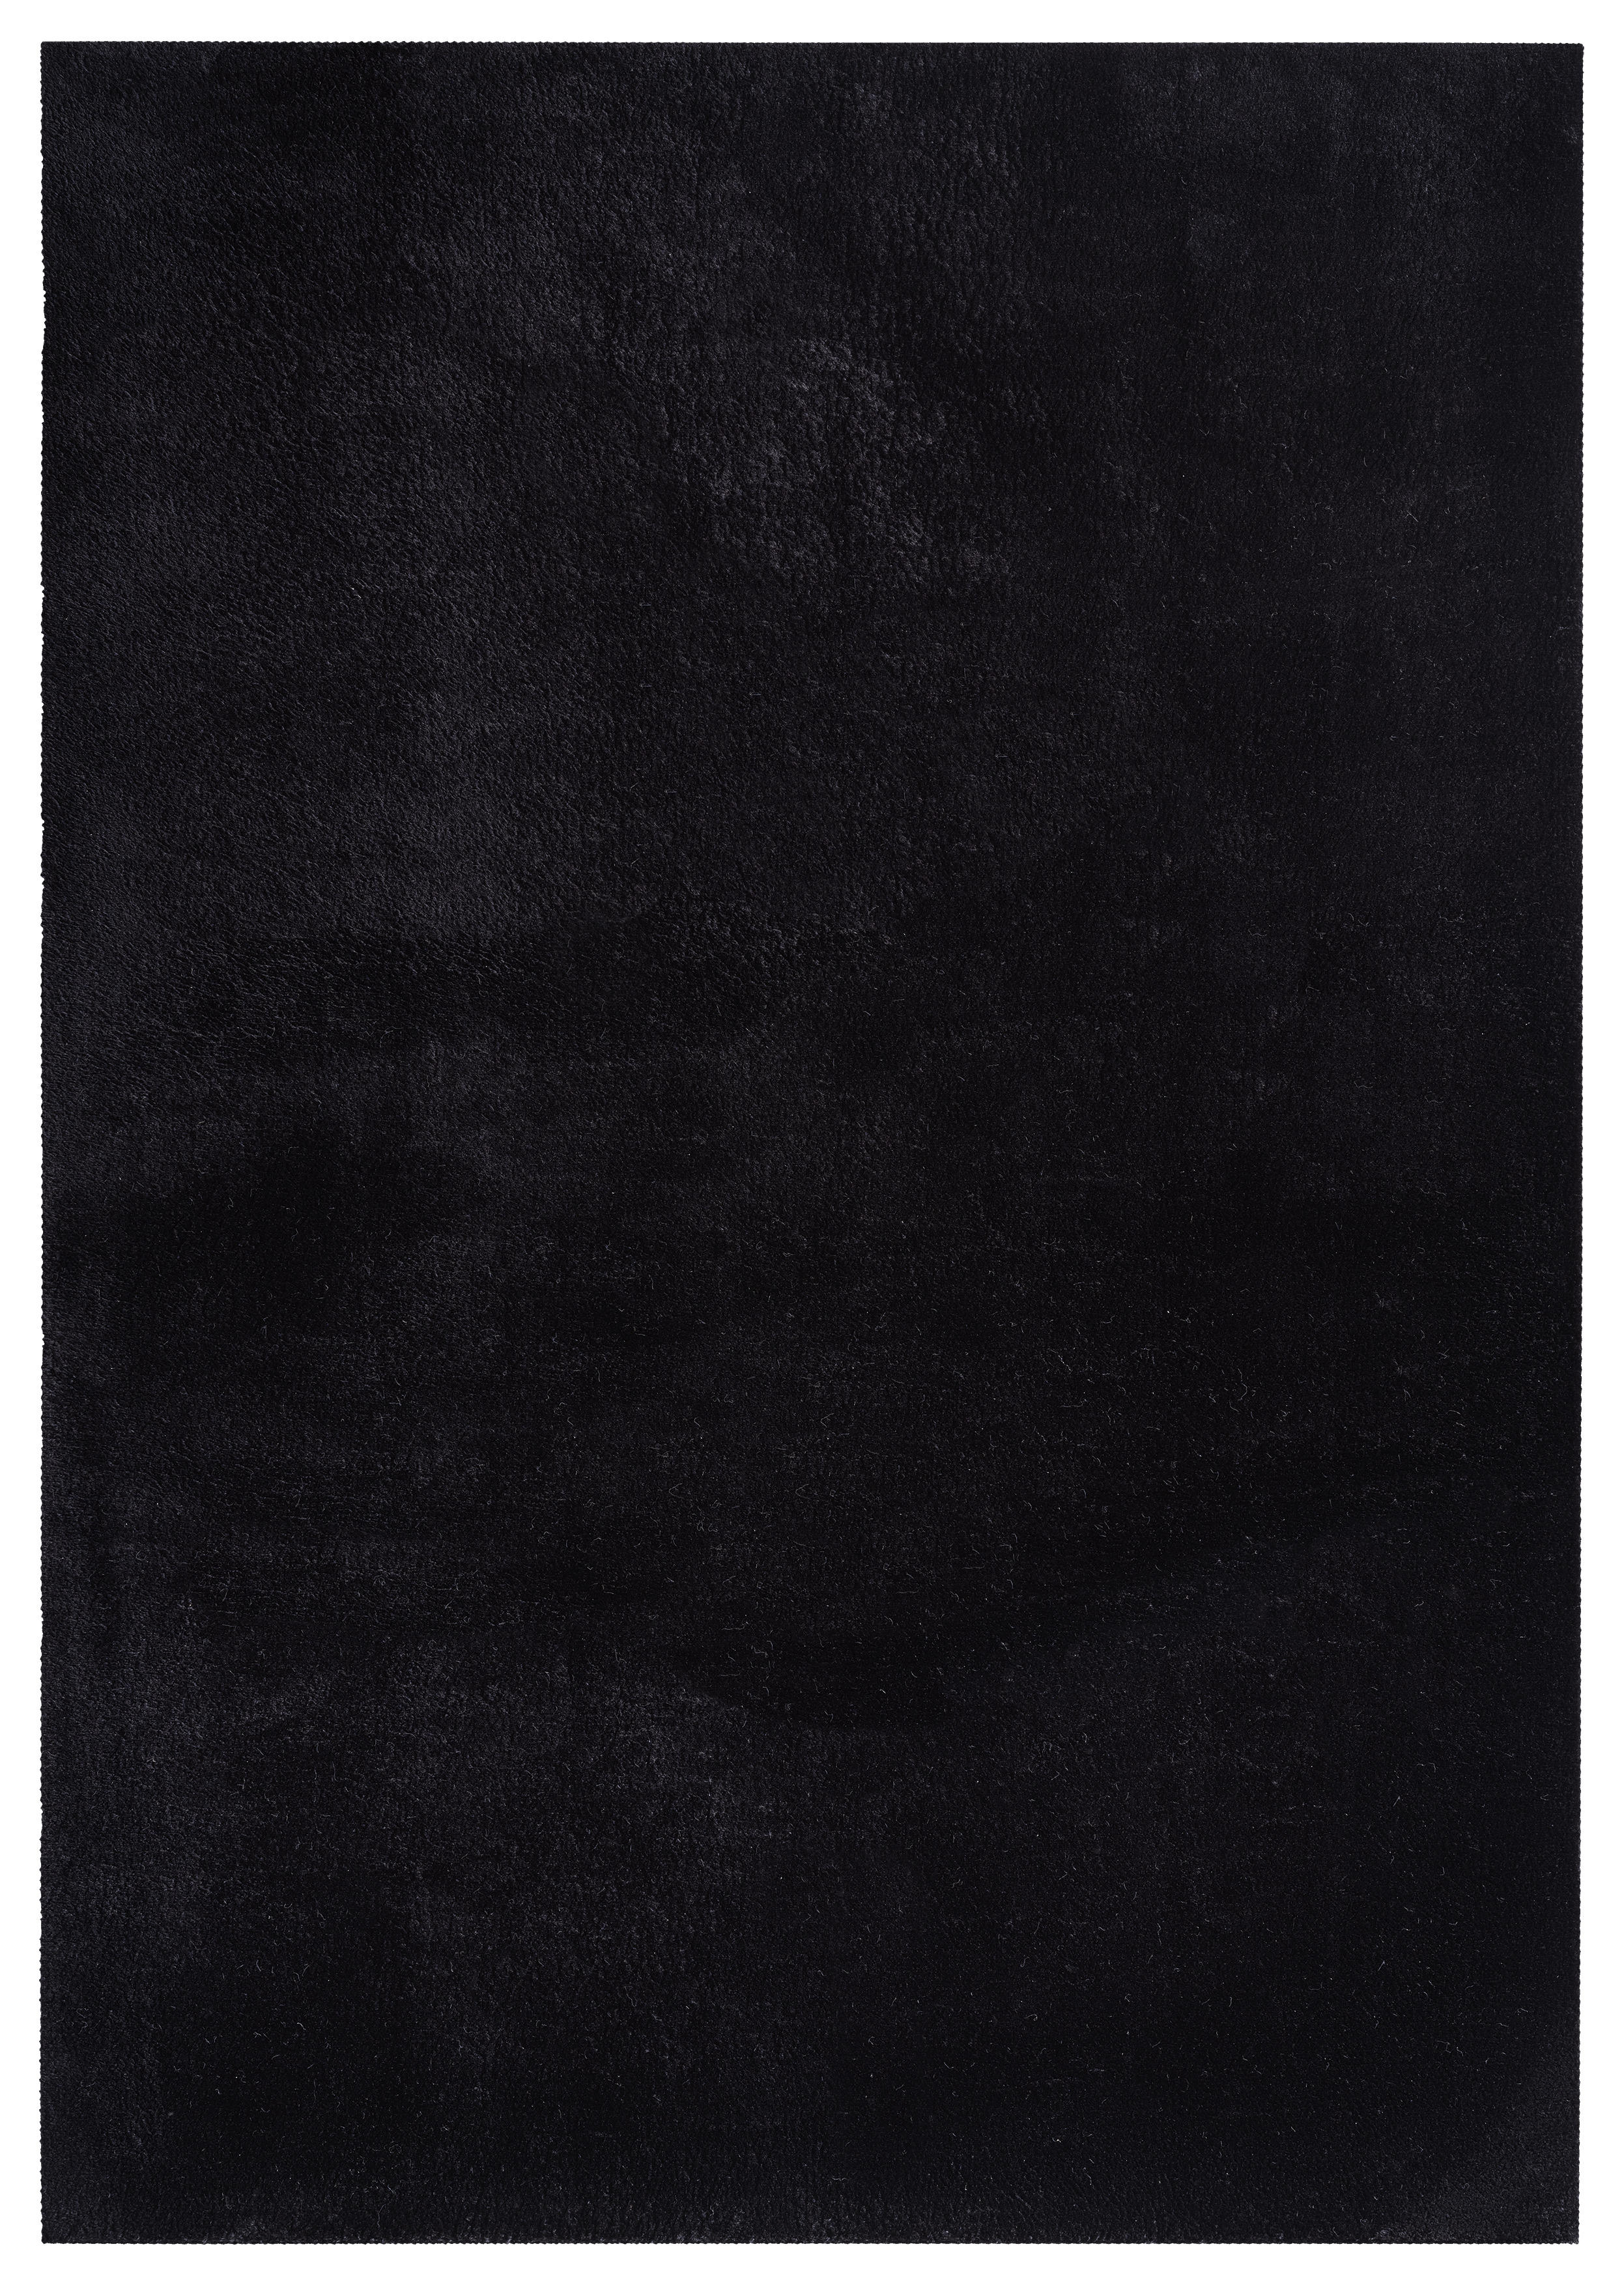 Teppich Loft schwarz B/L: ca. 80x150 cm Loft - schwarz (80,00/150,00cm)